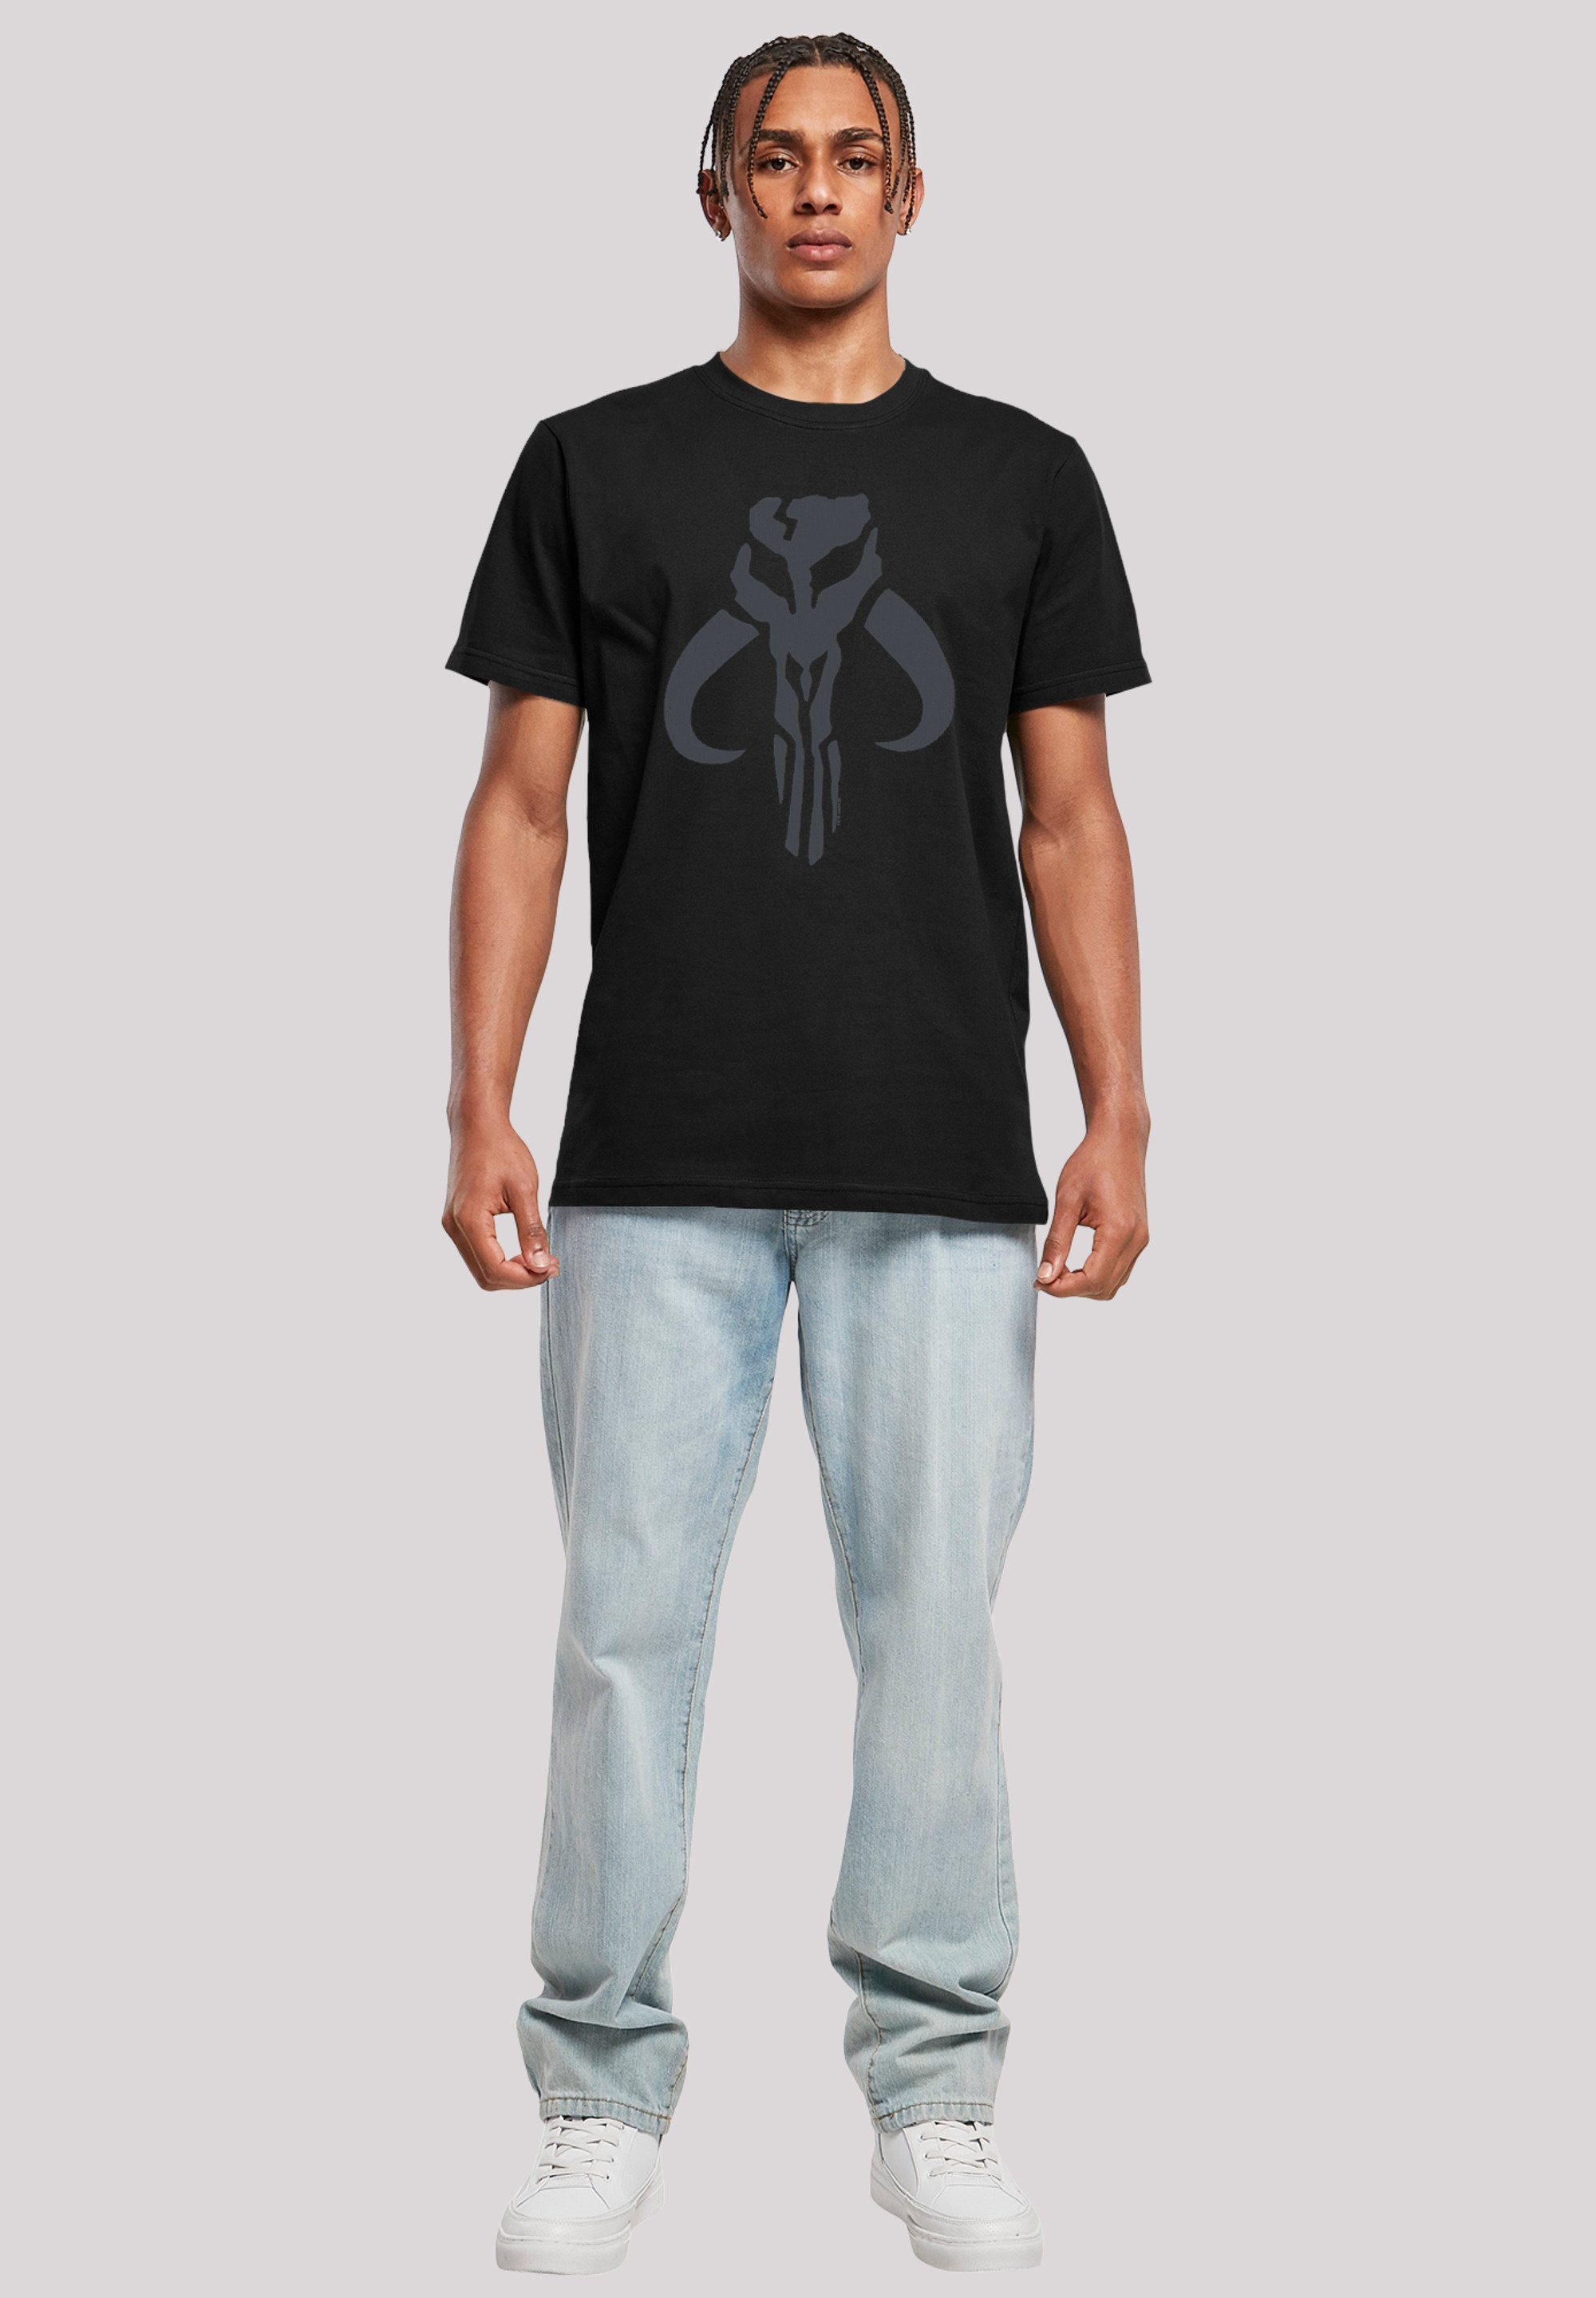 Wars Star Banther Skull T-Shirt Mandalorian F4NT4STIC Print